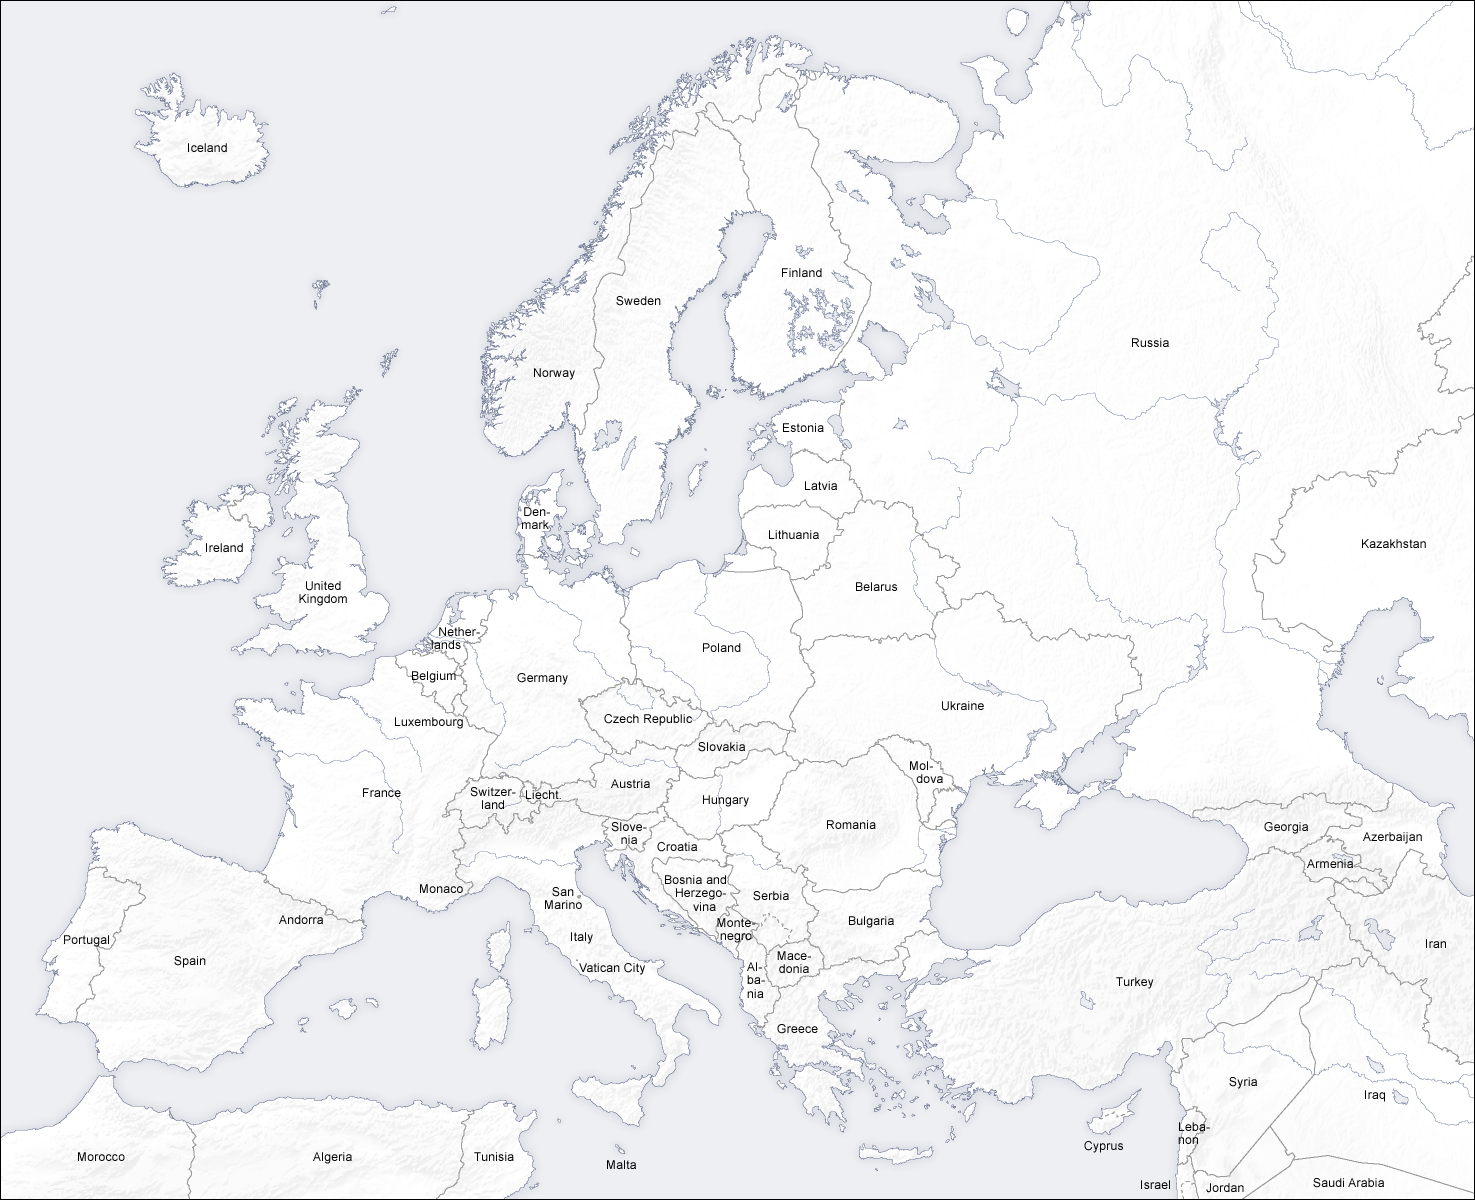 mapa continete europeo para imprimir paises